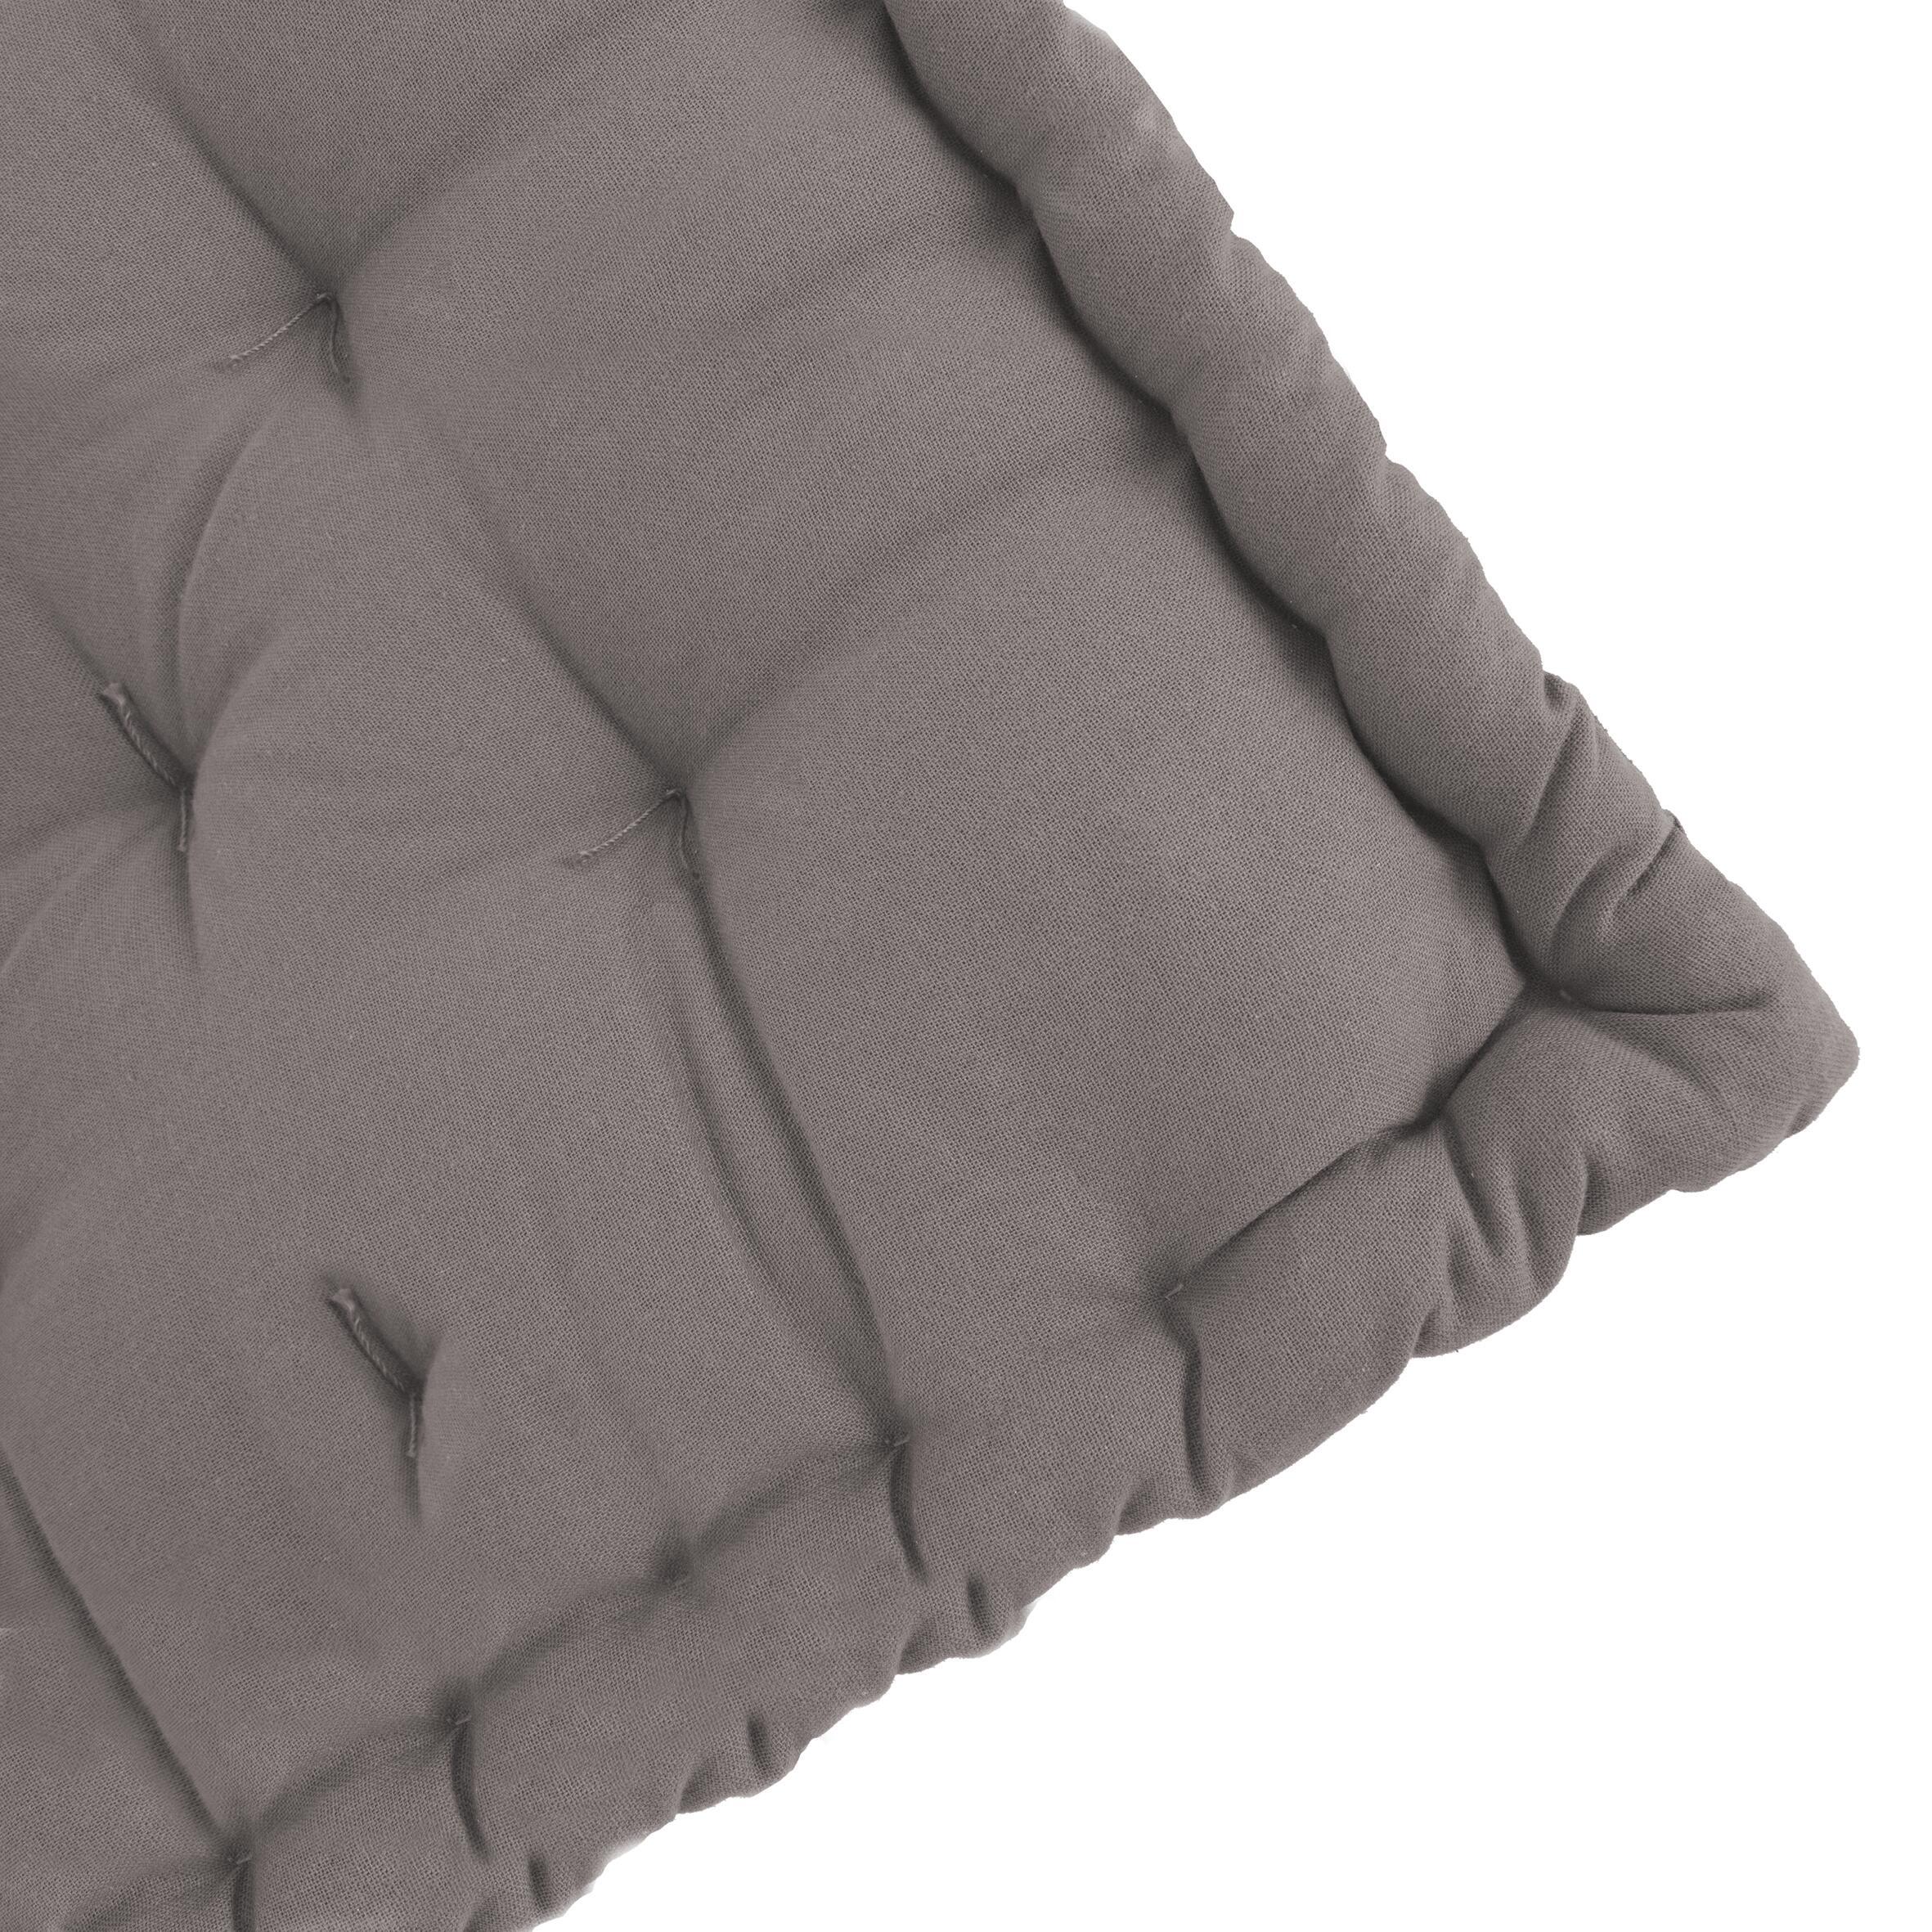 Cuscino da pavimento Santorin grigio 80x120 cm - 2